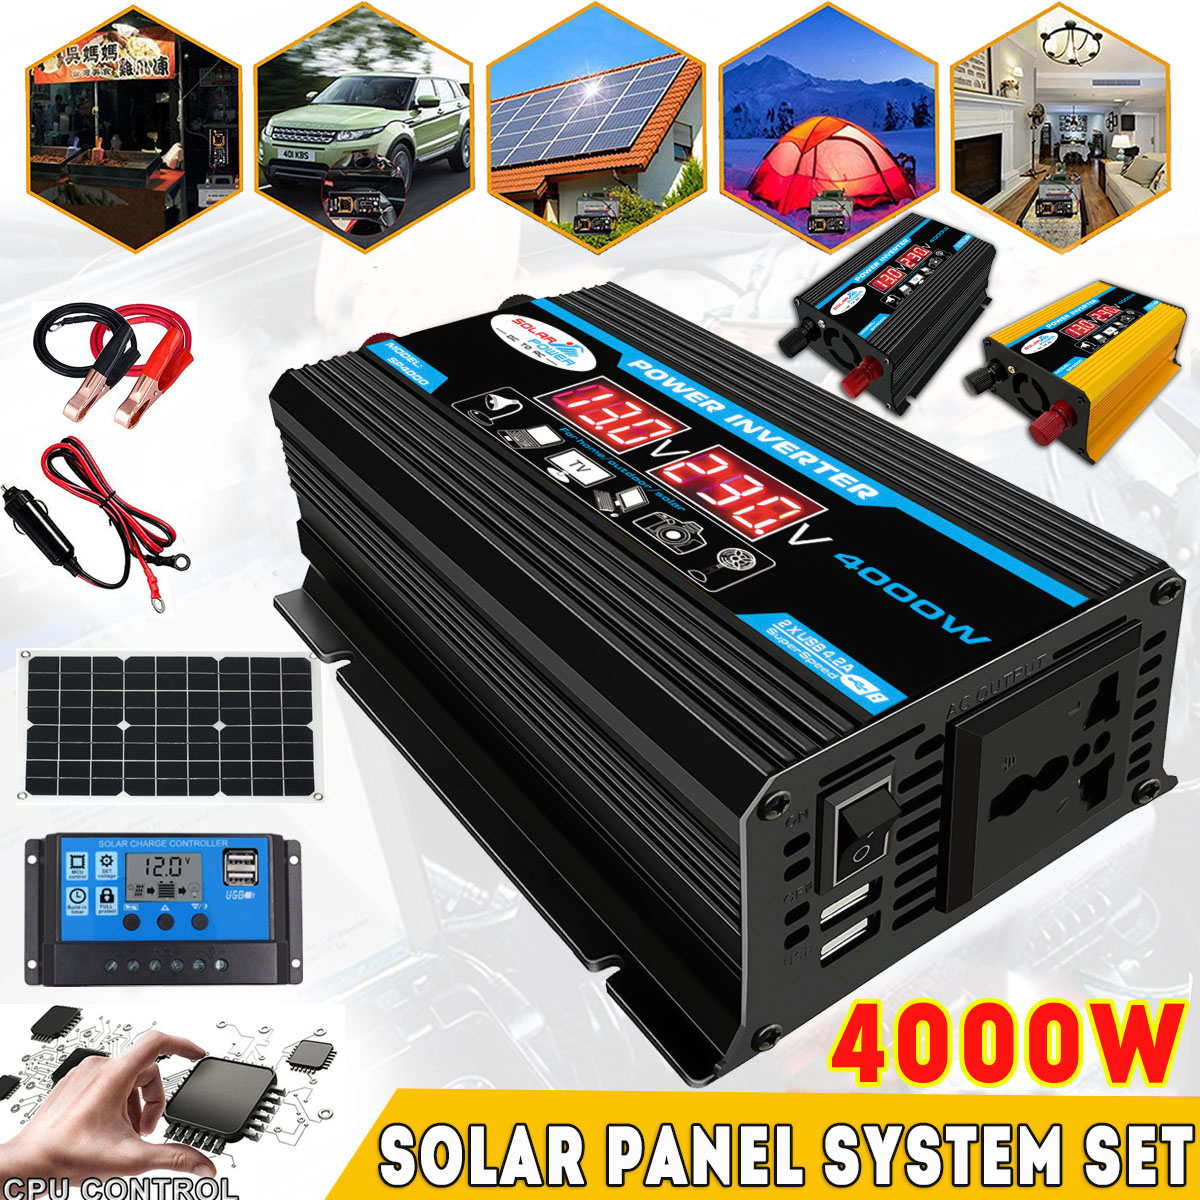 Solar-Power-Generation-System-18W-Solar-Panel--4000W-Dual-USB-LCD-Power-Inverter-12V-to-220V110V-30A-1868743-1